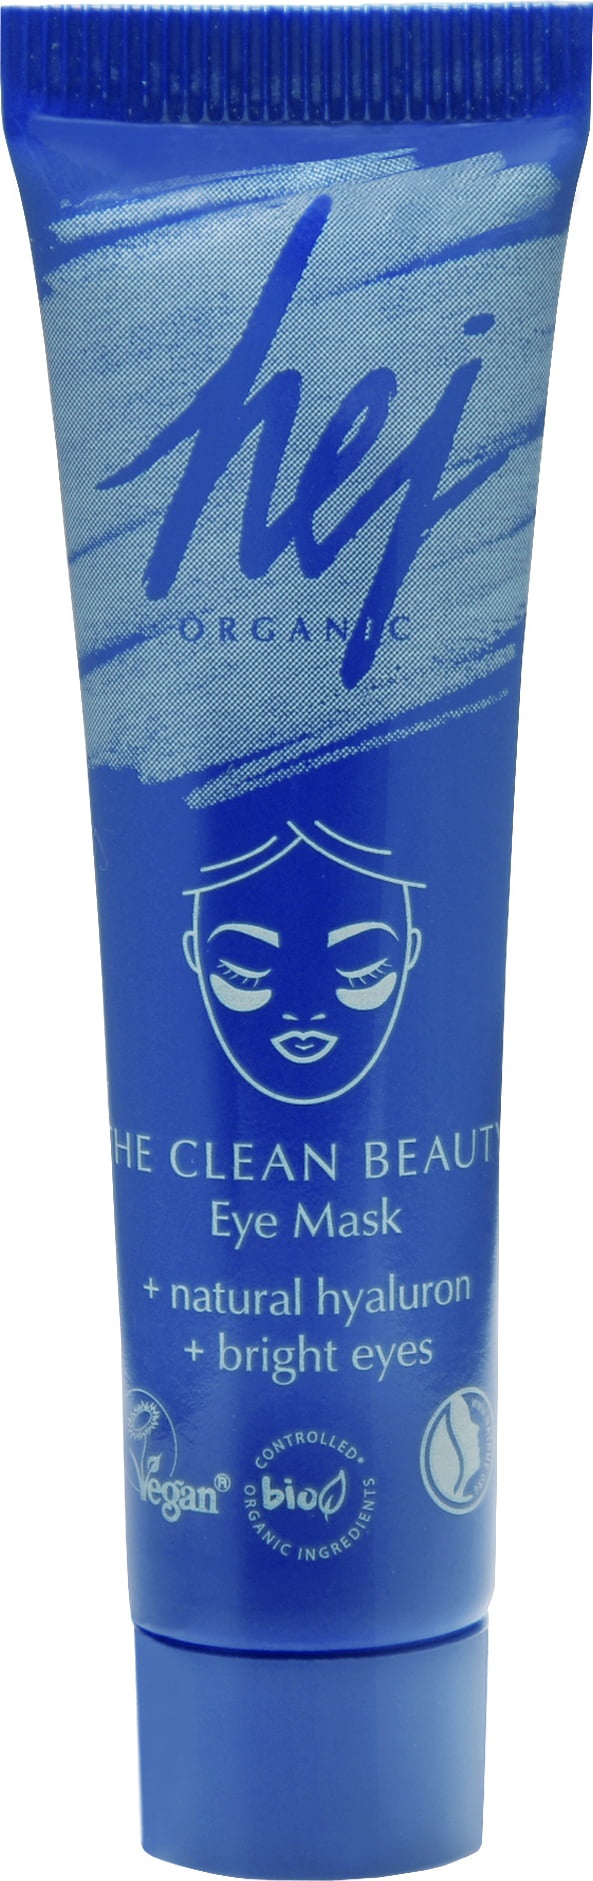 Hej organic The Clean Beauty Eye Mask